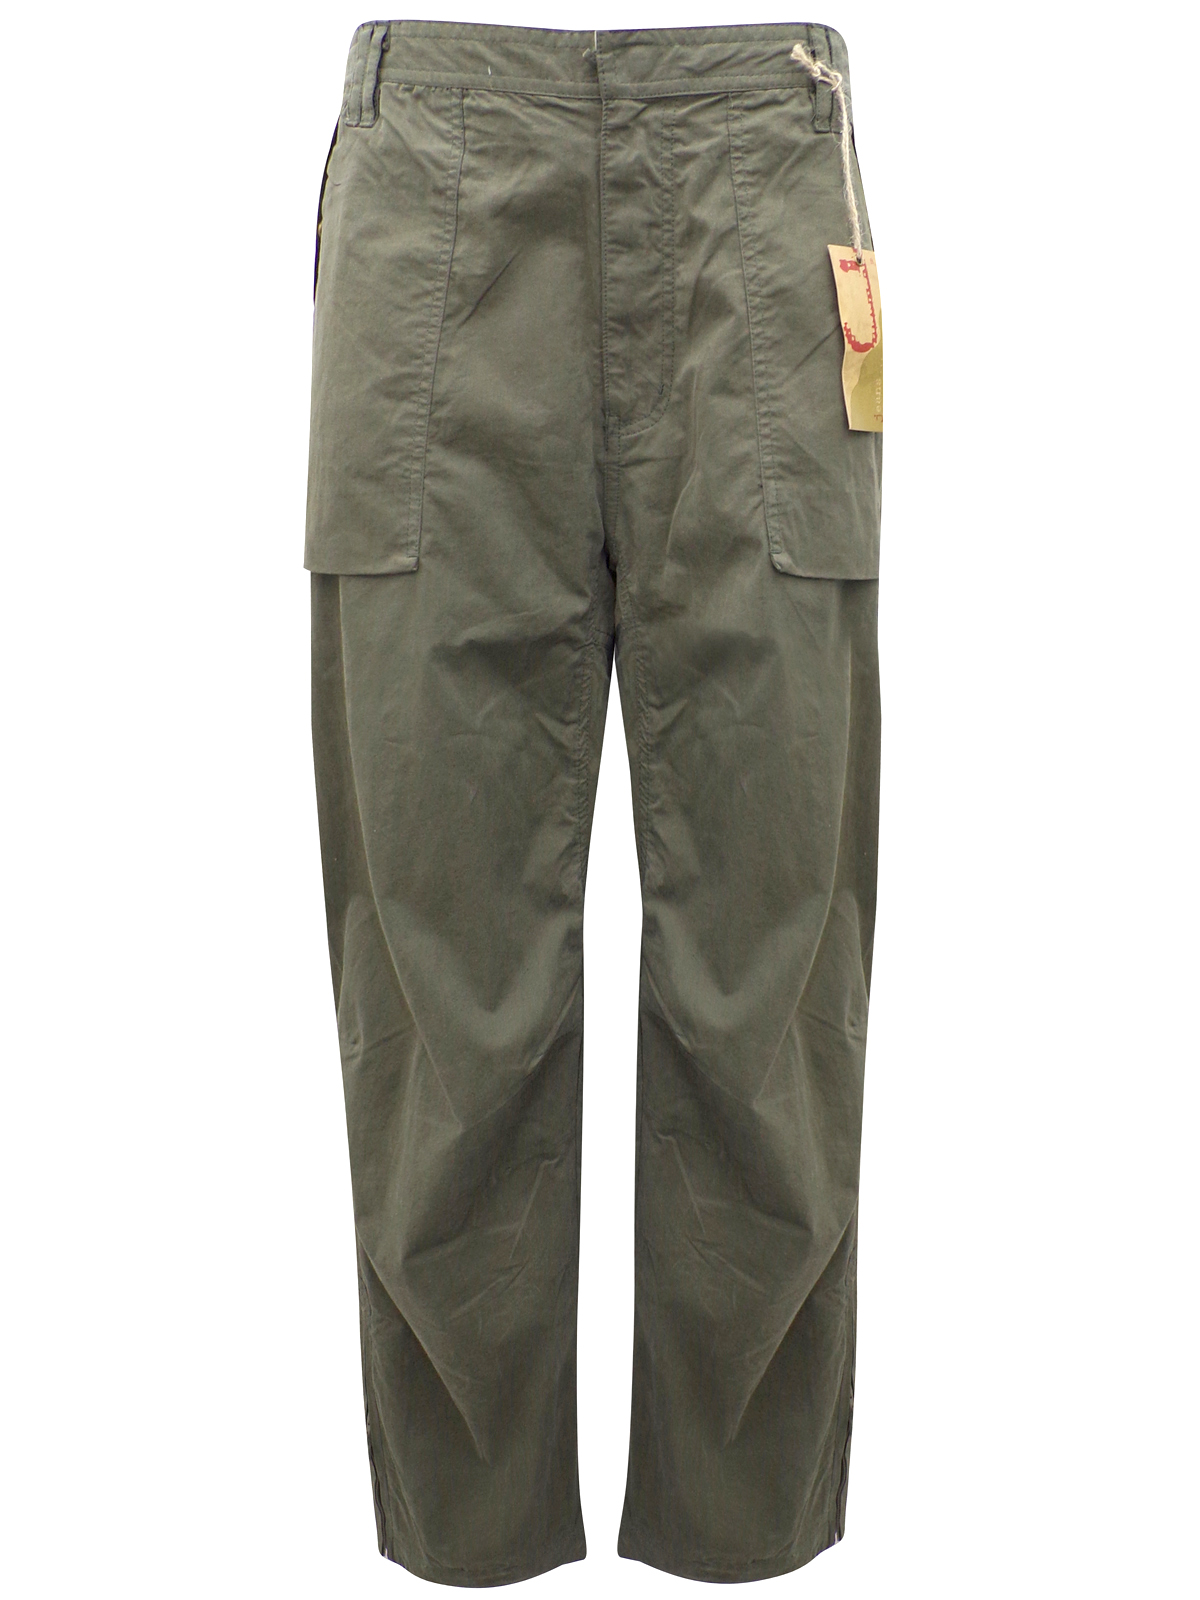 BHS - - BH5 KHAKI Cotton Rich Utility Cargo Trousers - Waist Size 40 to ...